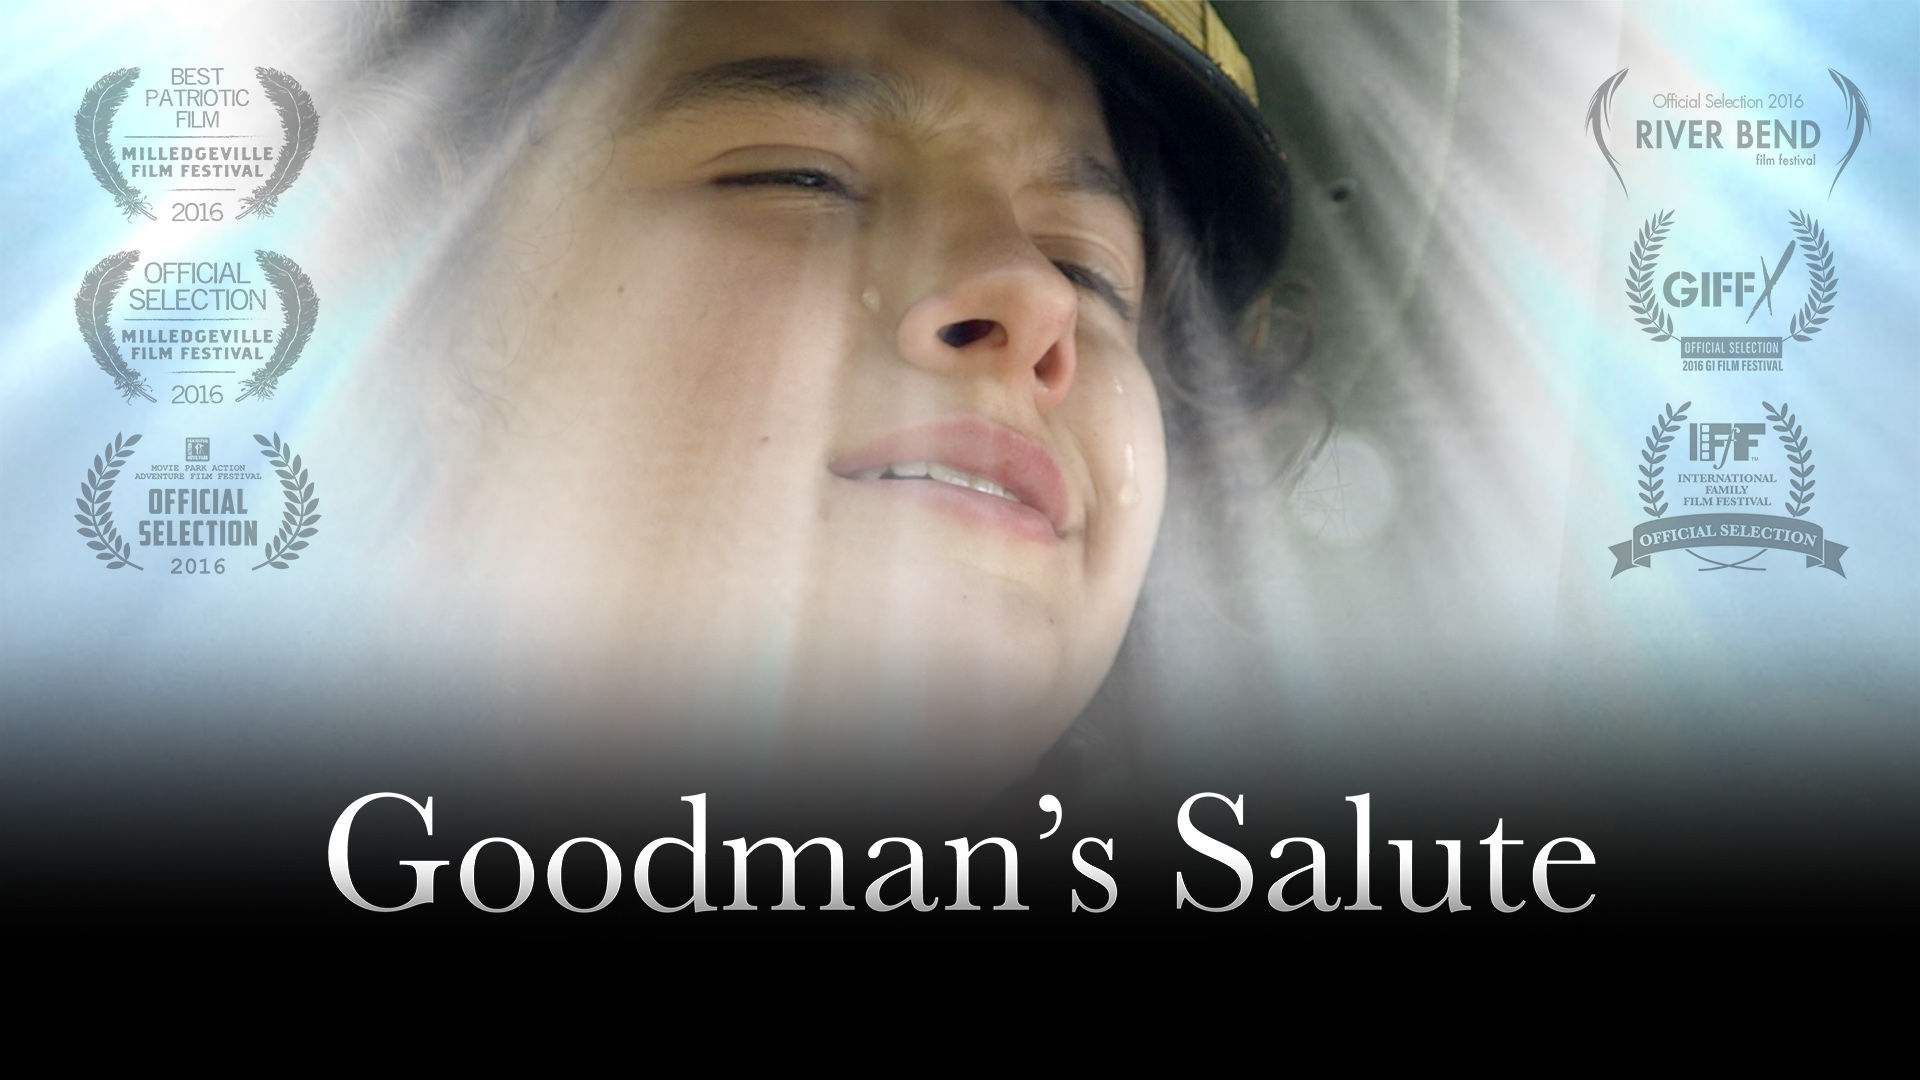 Goodman's Salute (2015)